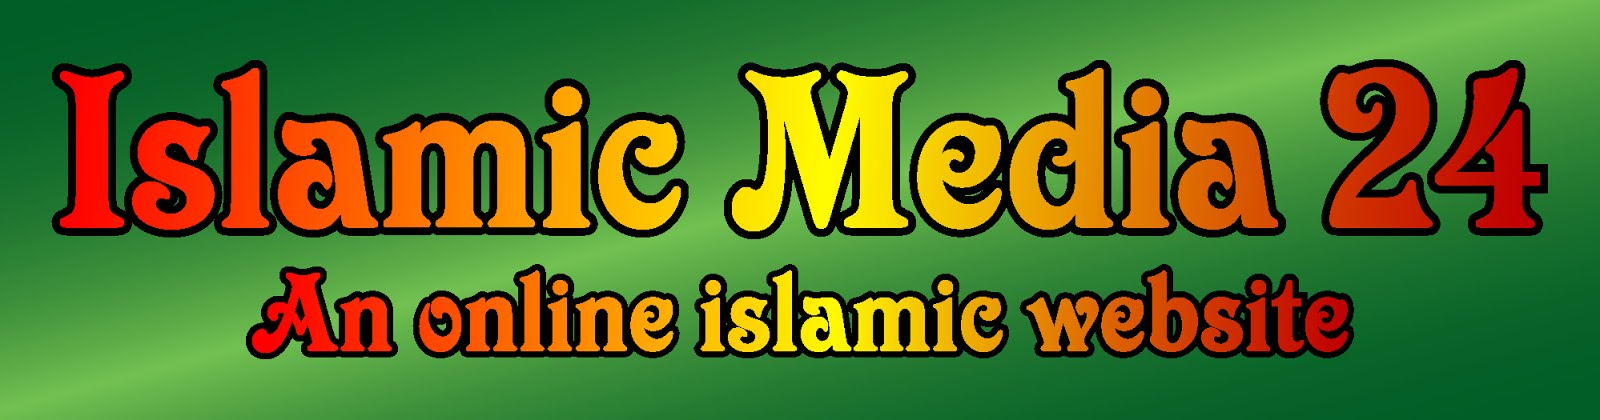 Islamic Media 24